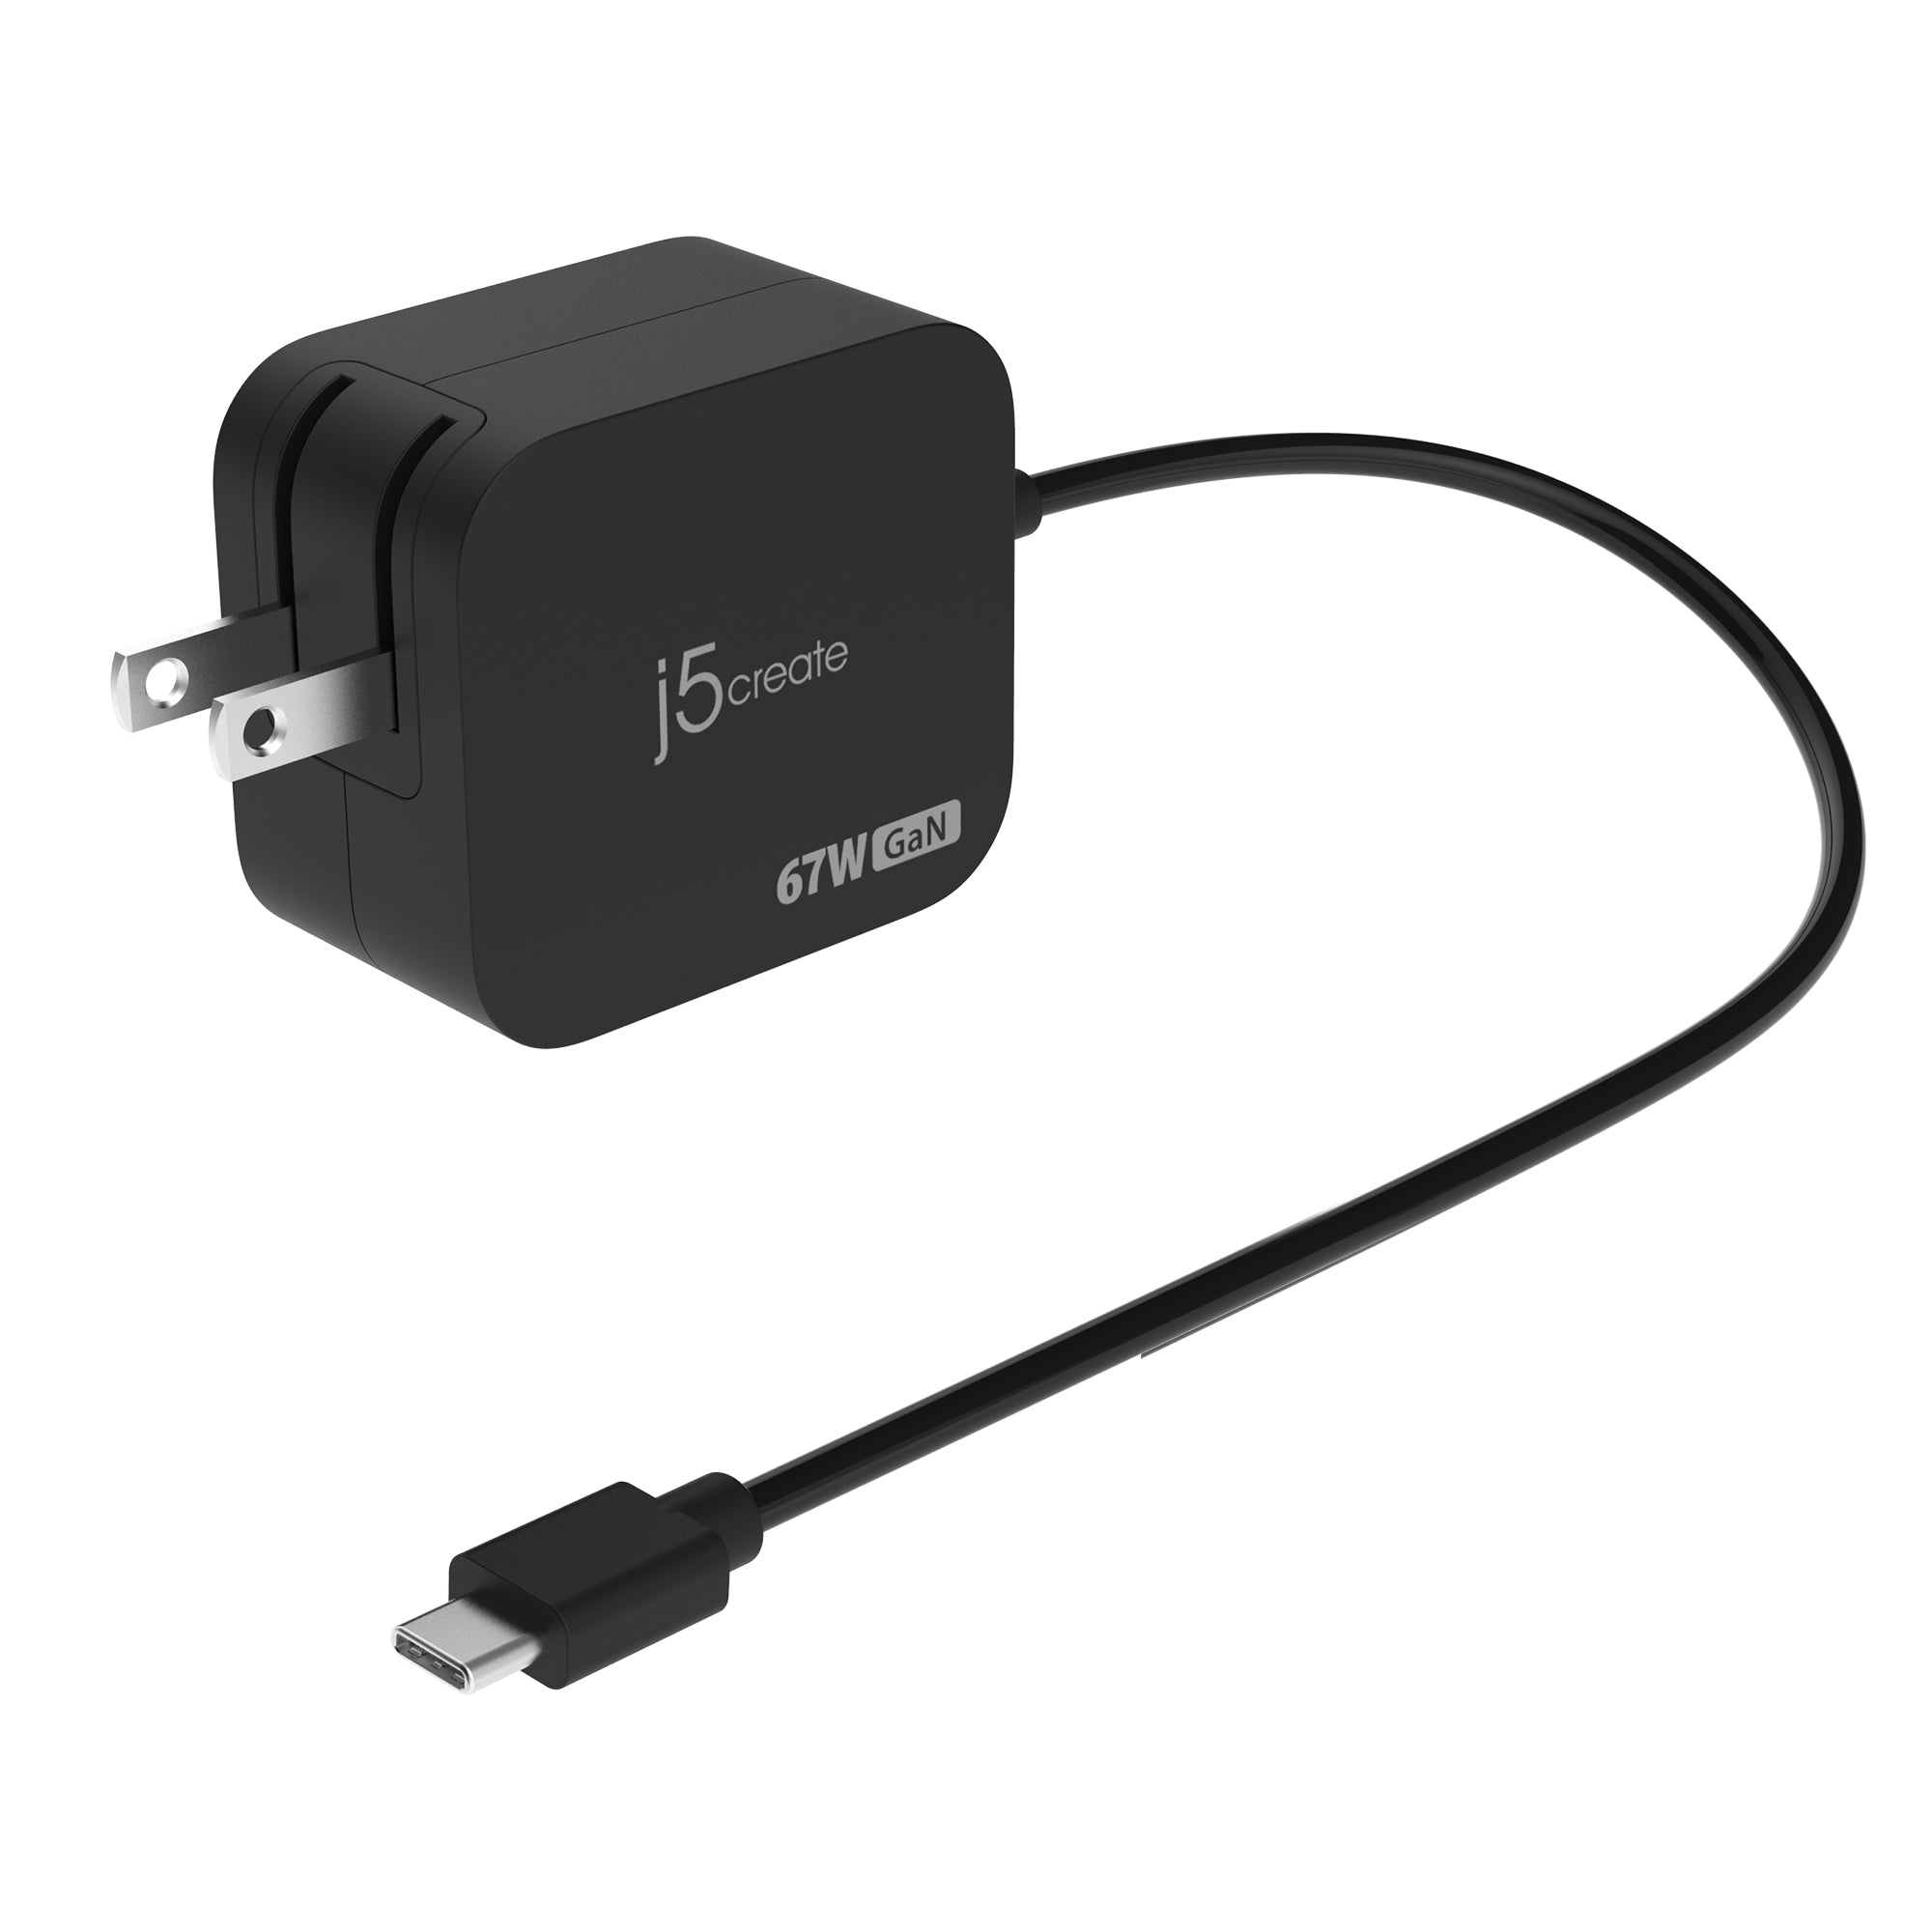 JUP1565N 67W GaN USB-Cケーブル付き PD充電器(1.8m) – new-jp-j5create